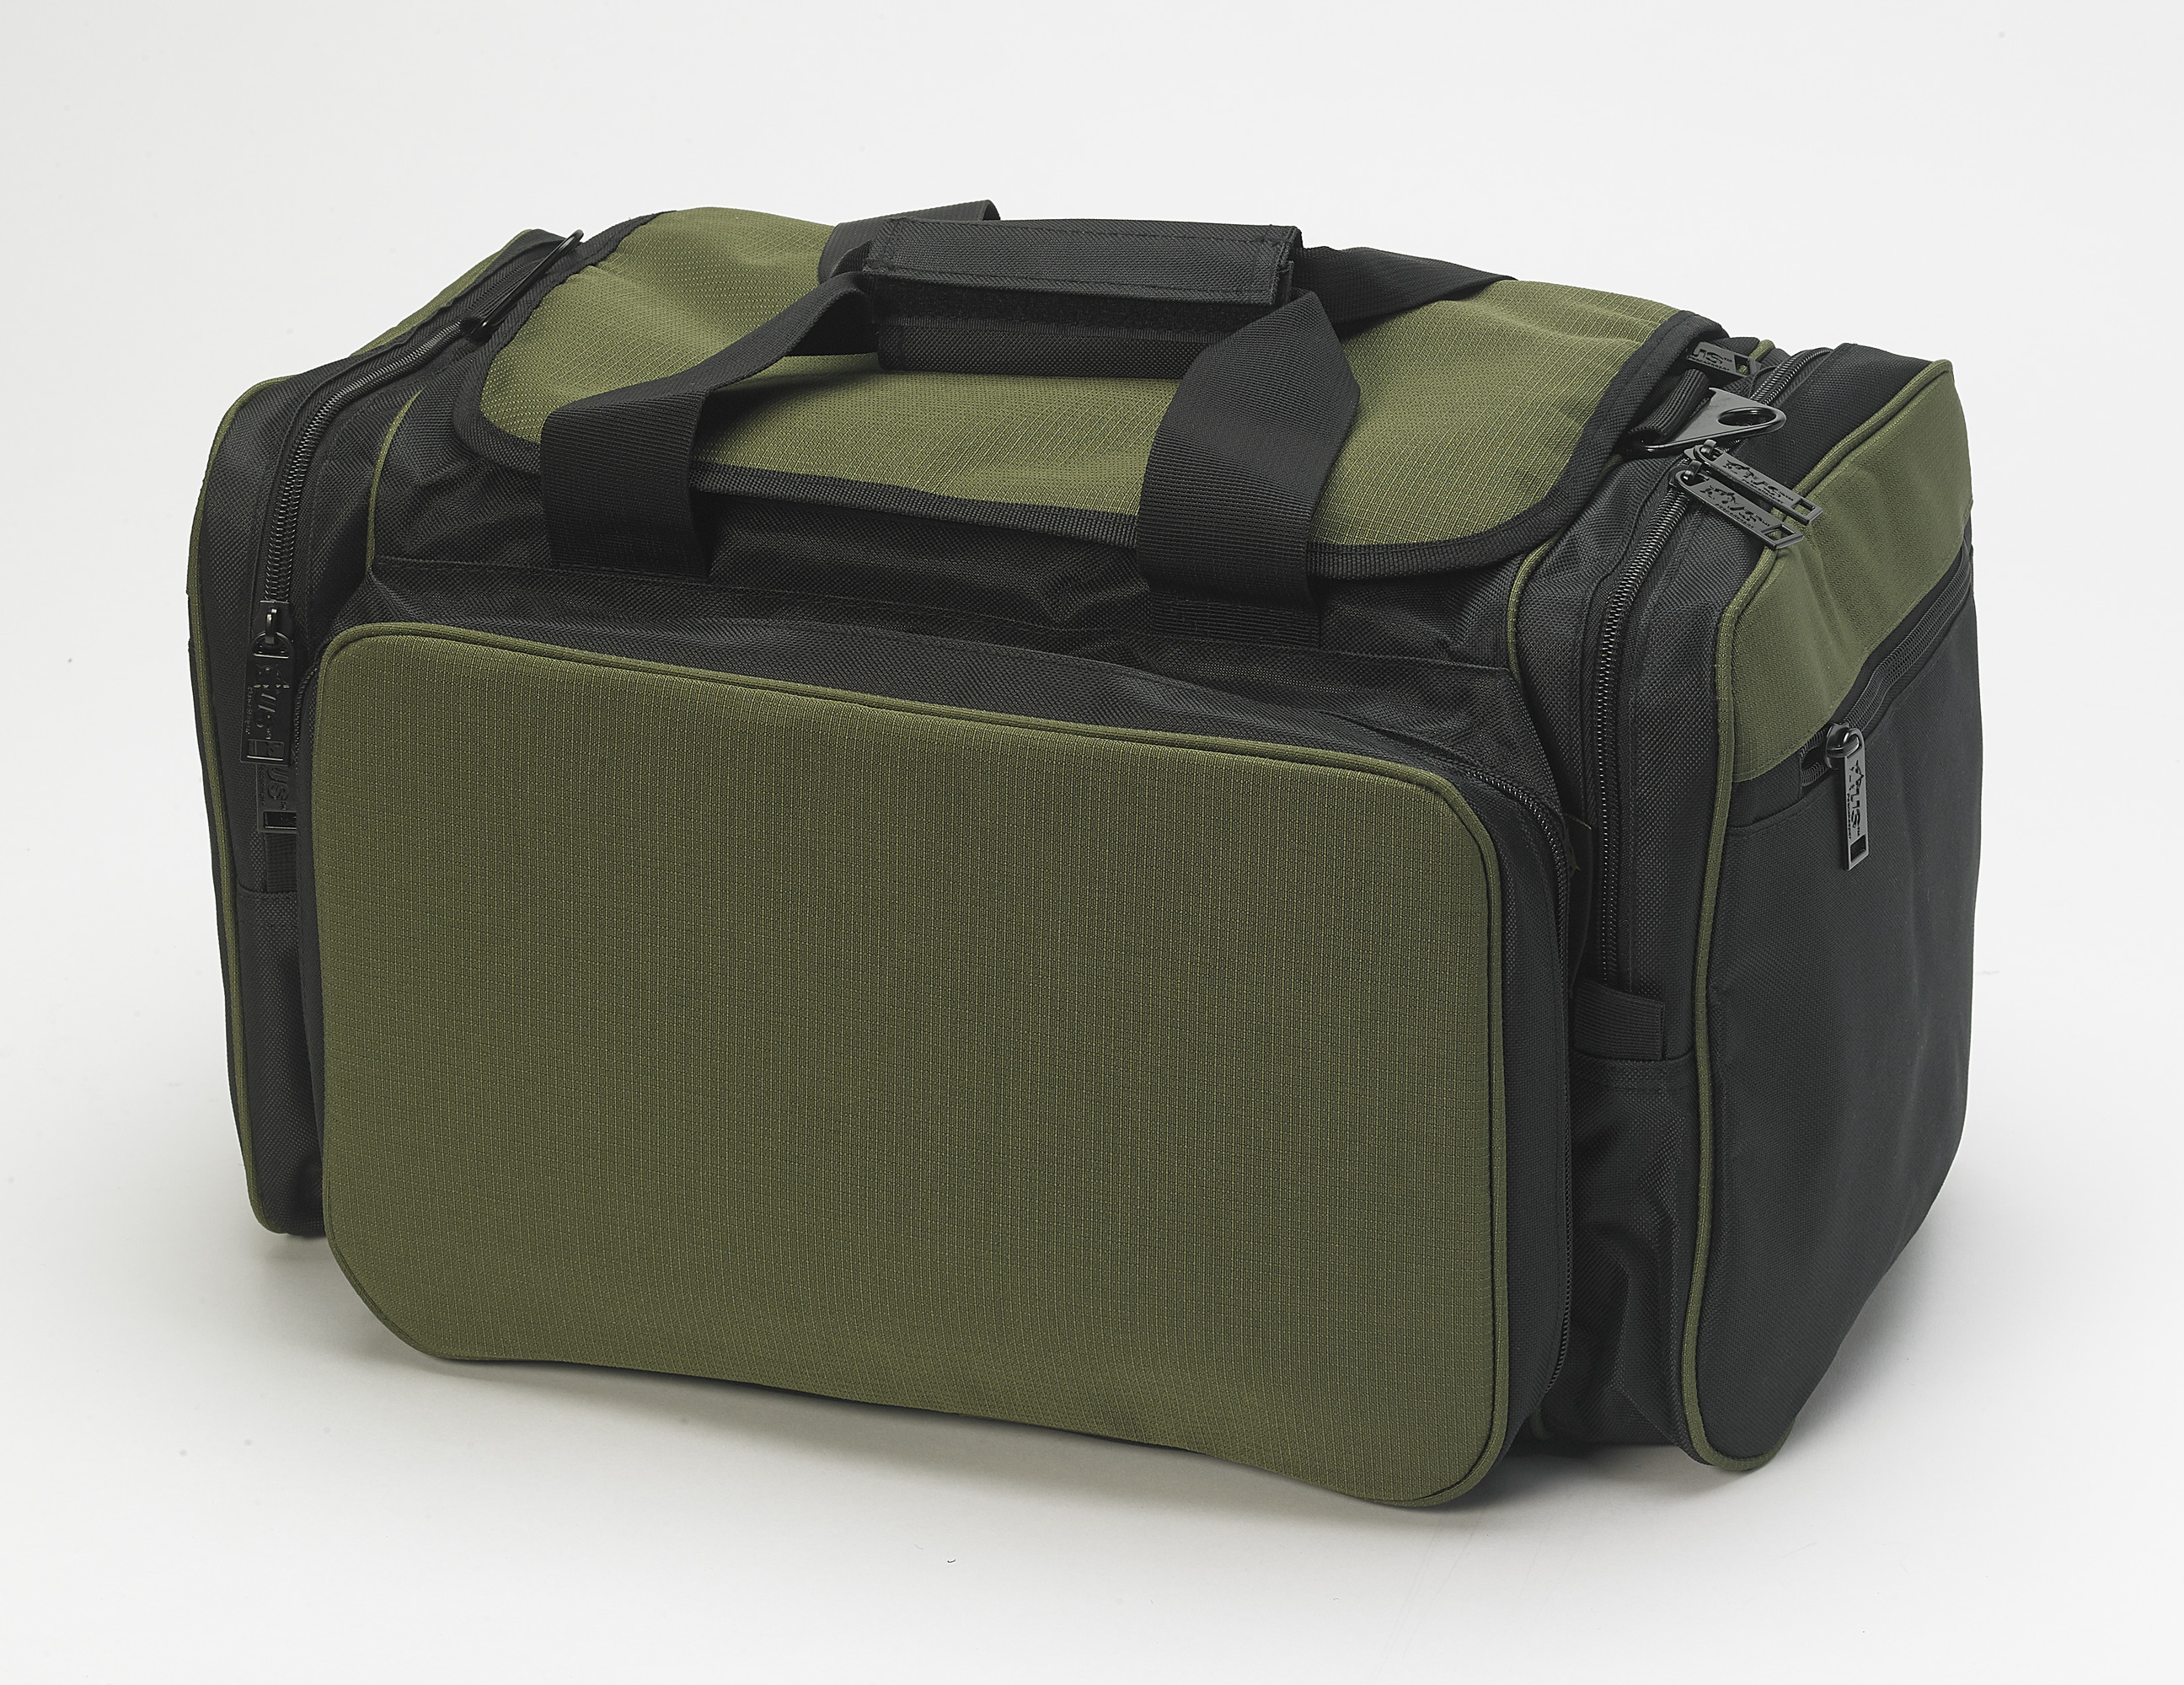 US Peacekeeper P22216 Large Range Bag - Green/Blk, 18